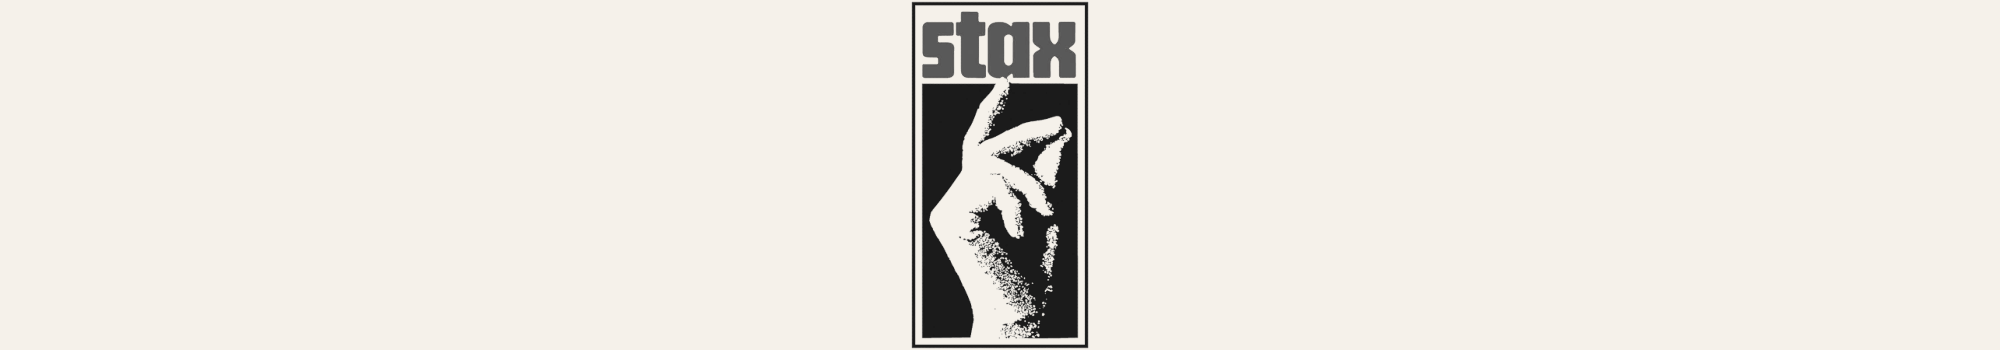 Stax Records logotyp